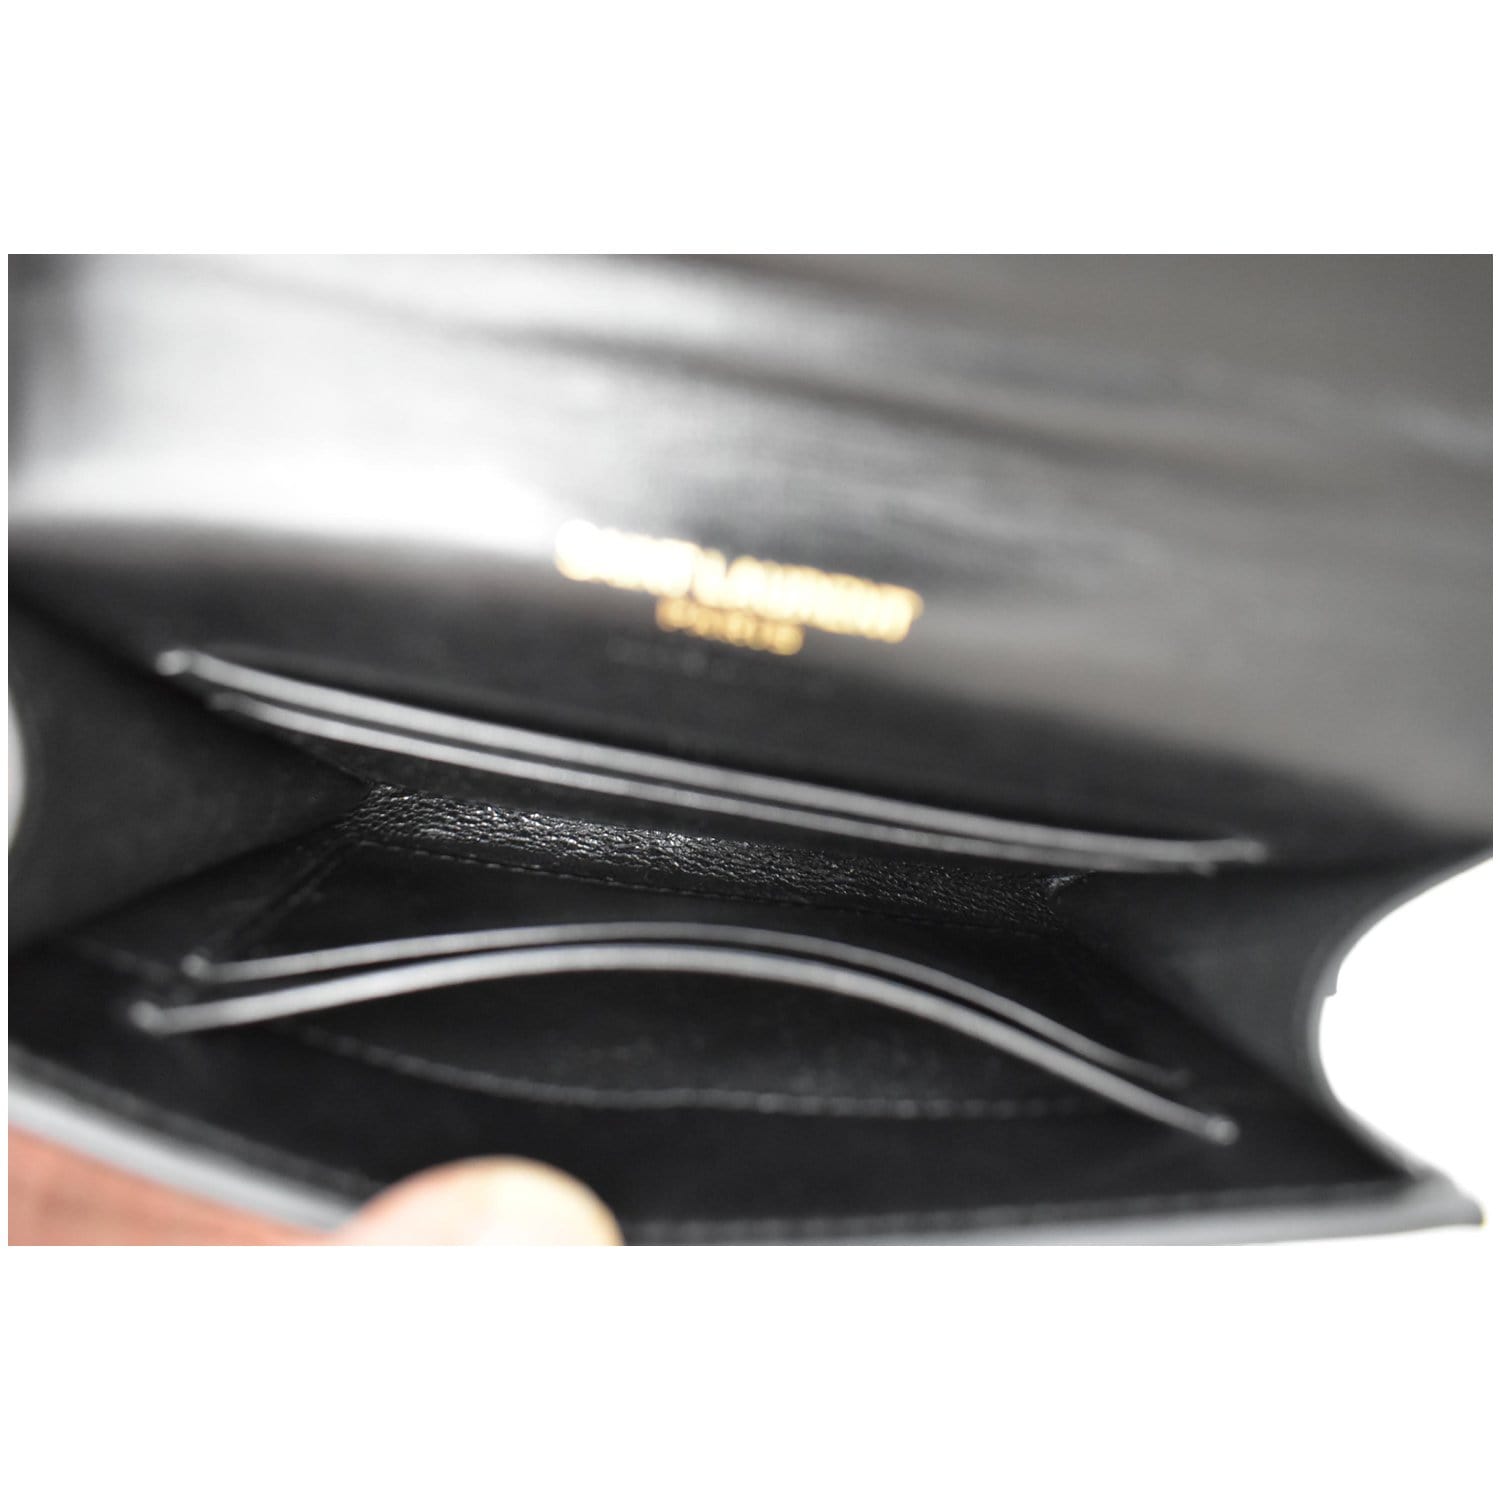 YVES SAINT LAURENT Envelope Glitter Patent Leather Wallet Red